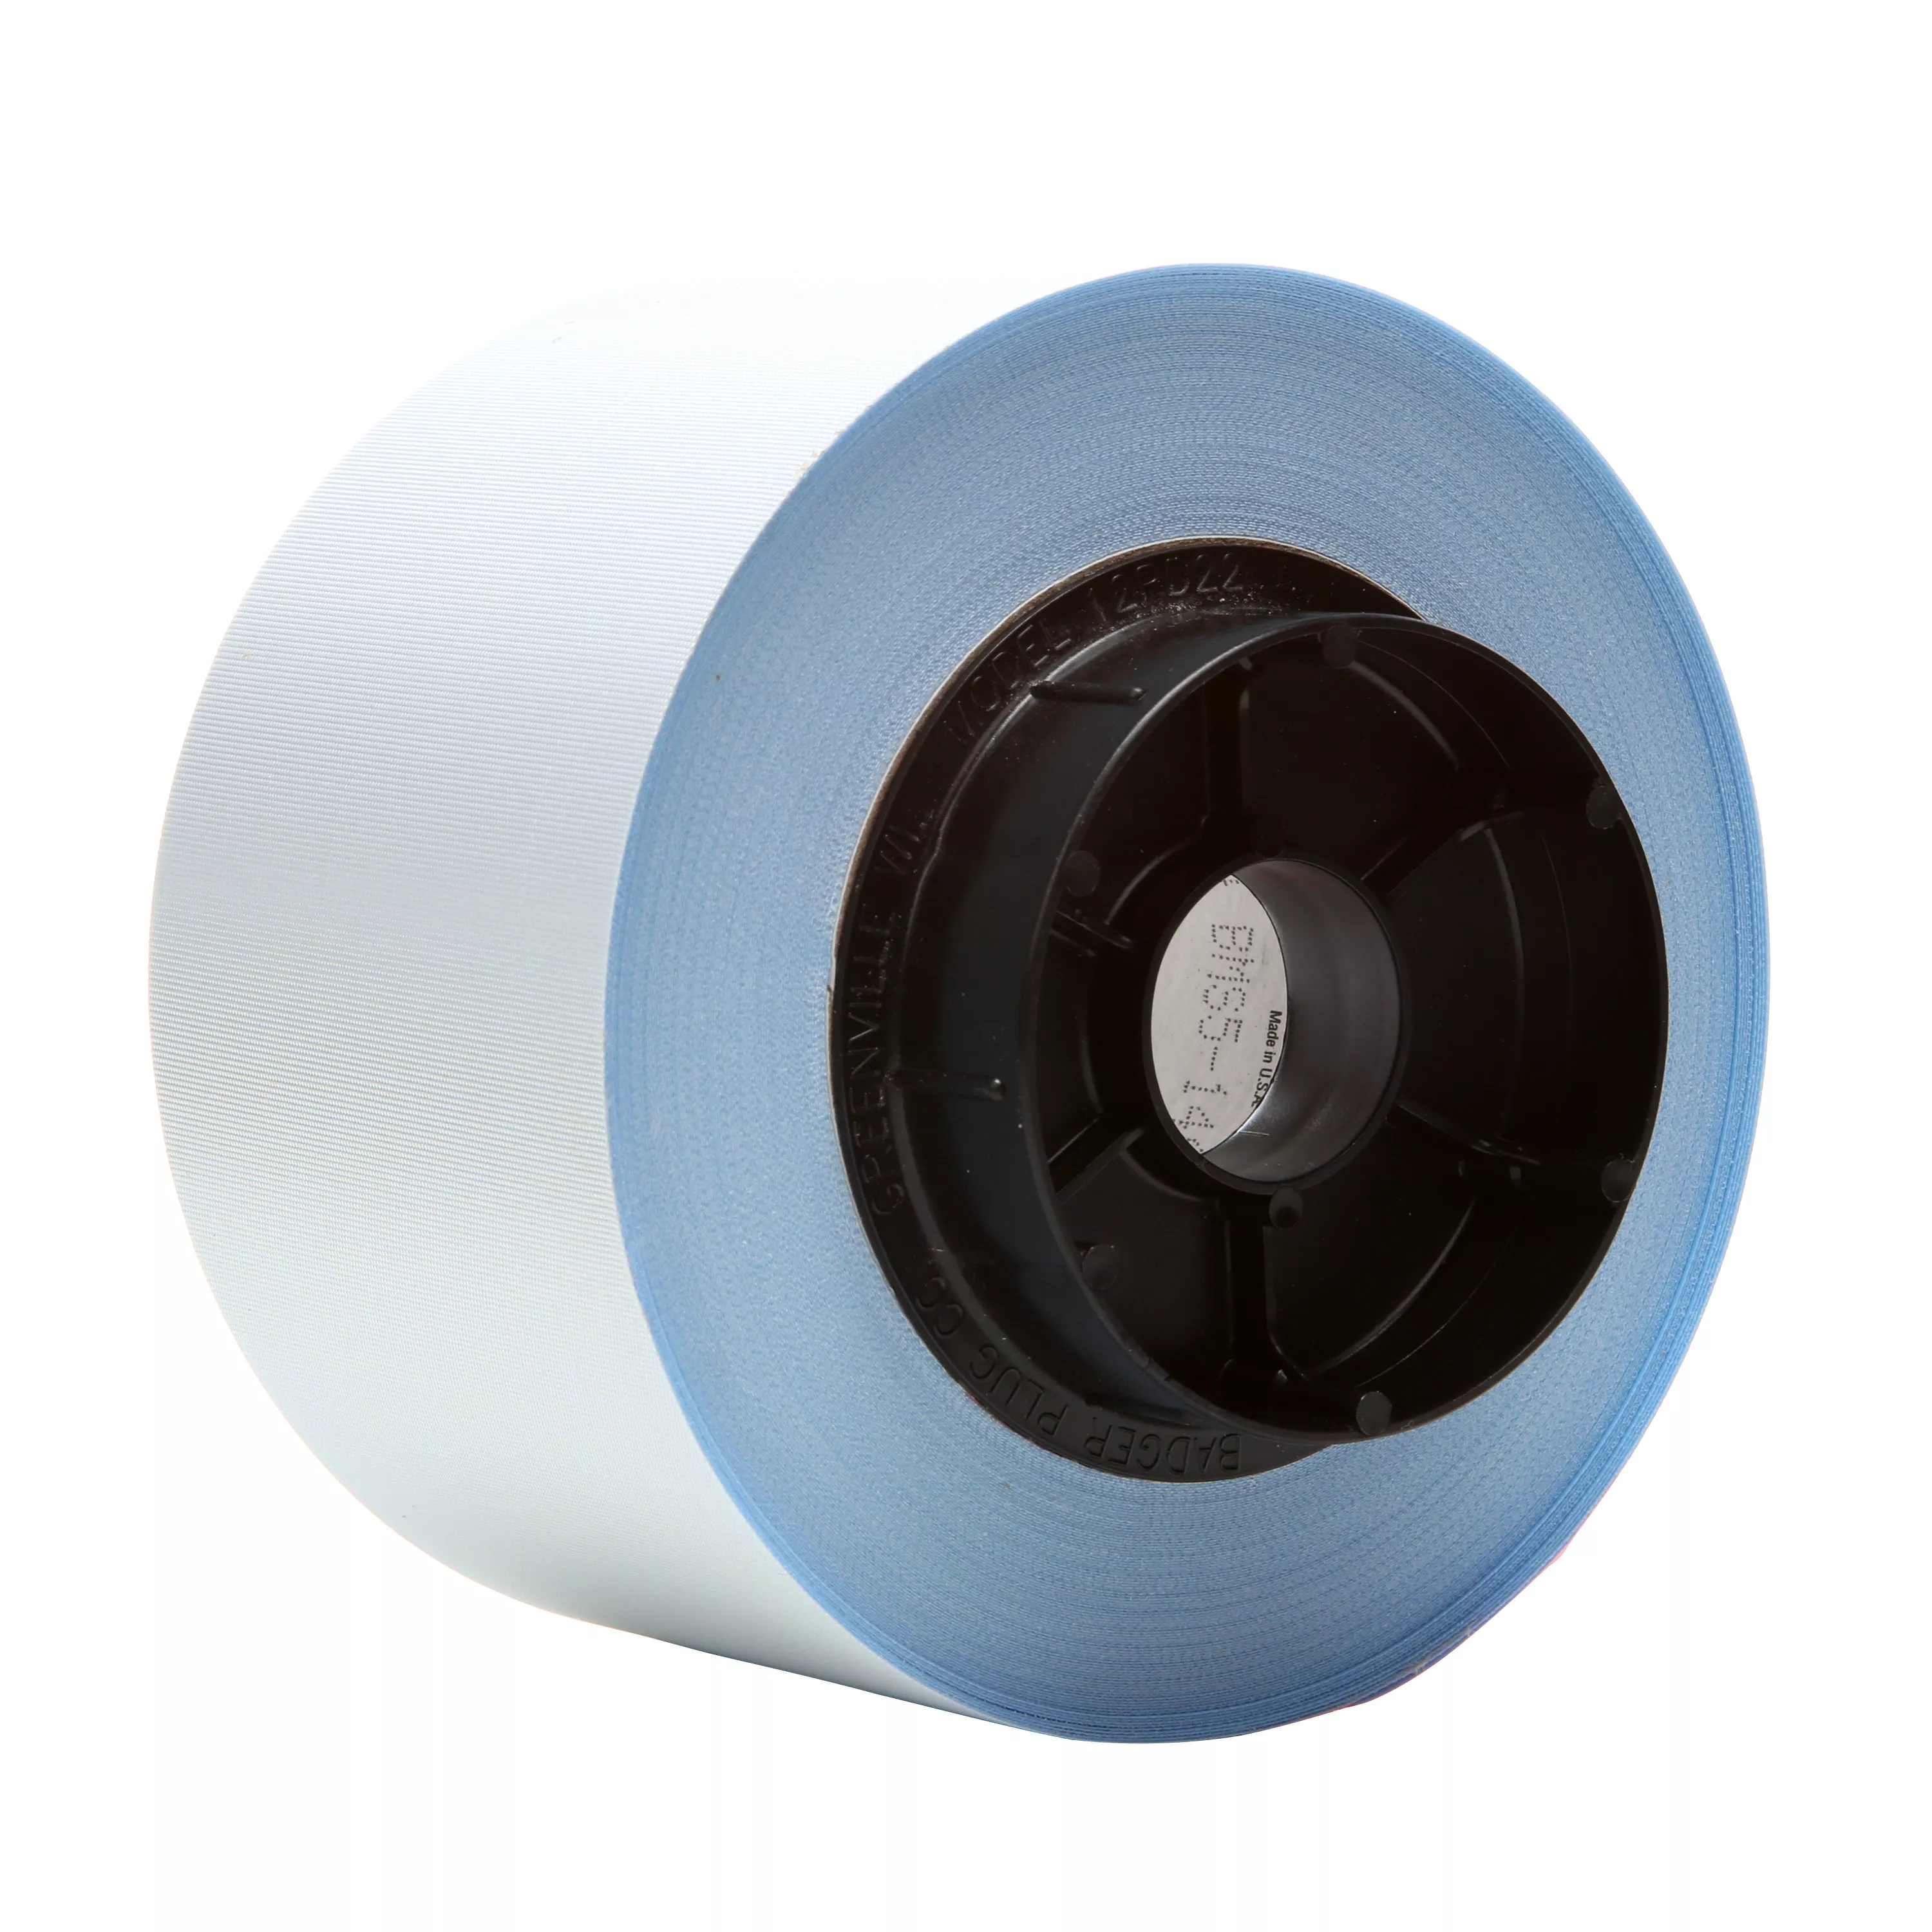 3M™ Glass Cloth Tape 398FR, White, 3 in x 36 yd, 7 mil, 12 rolls per
case